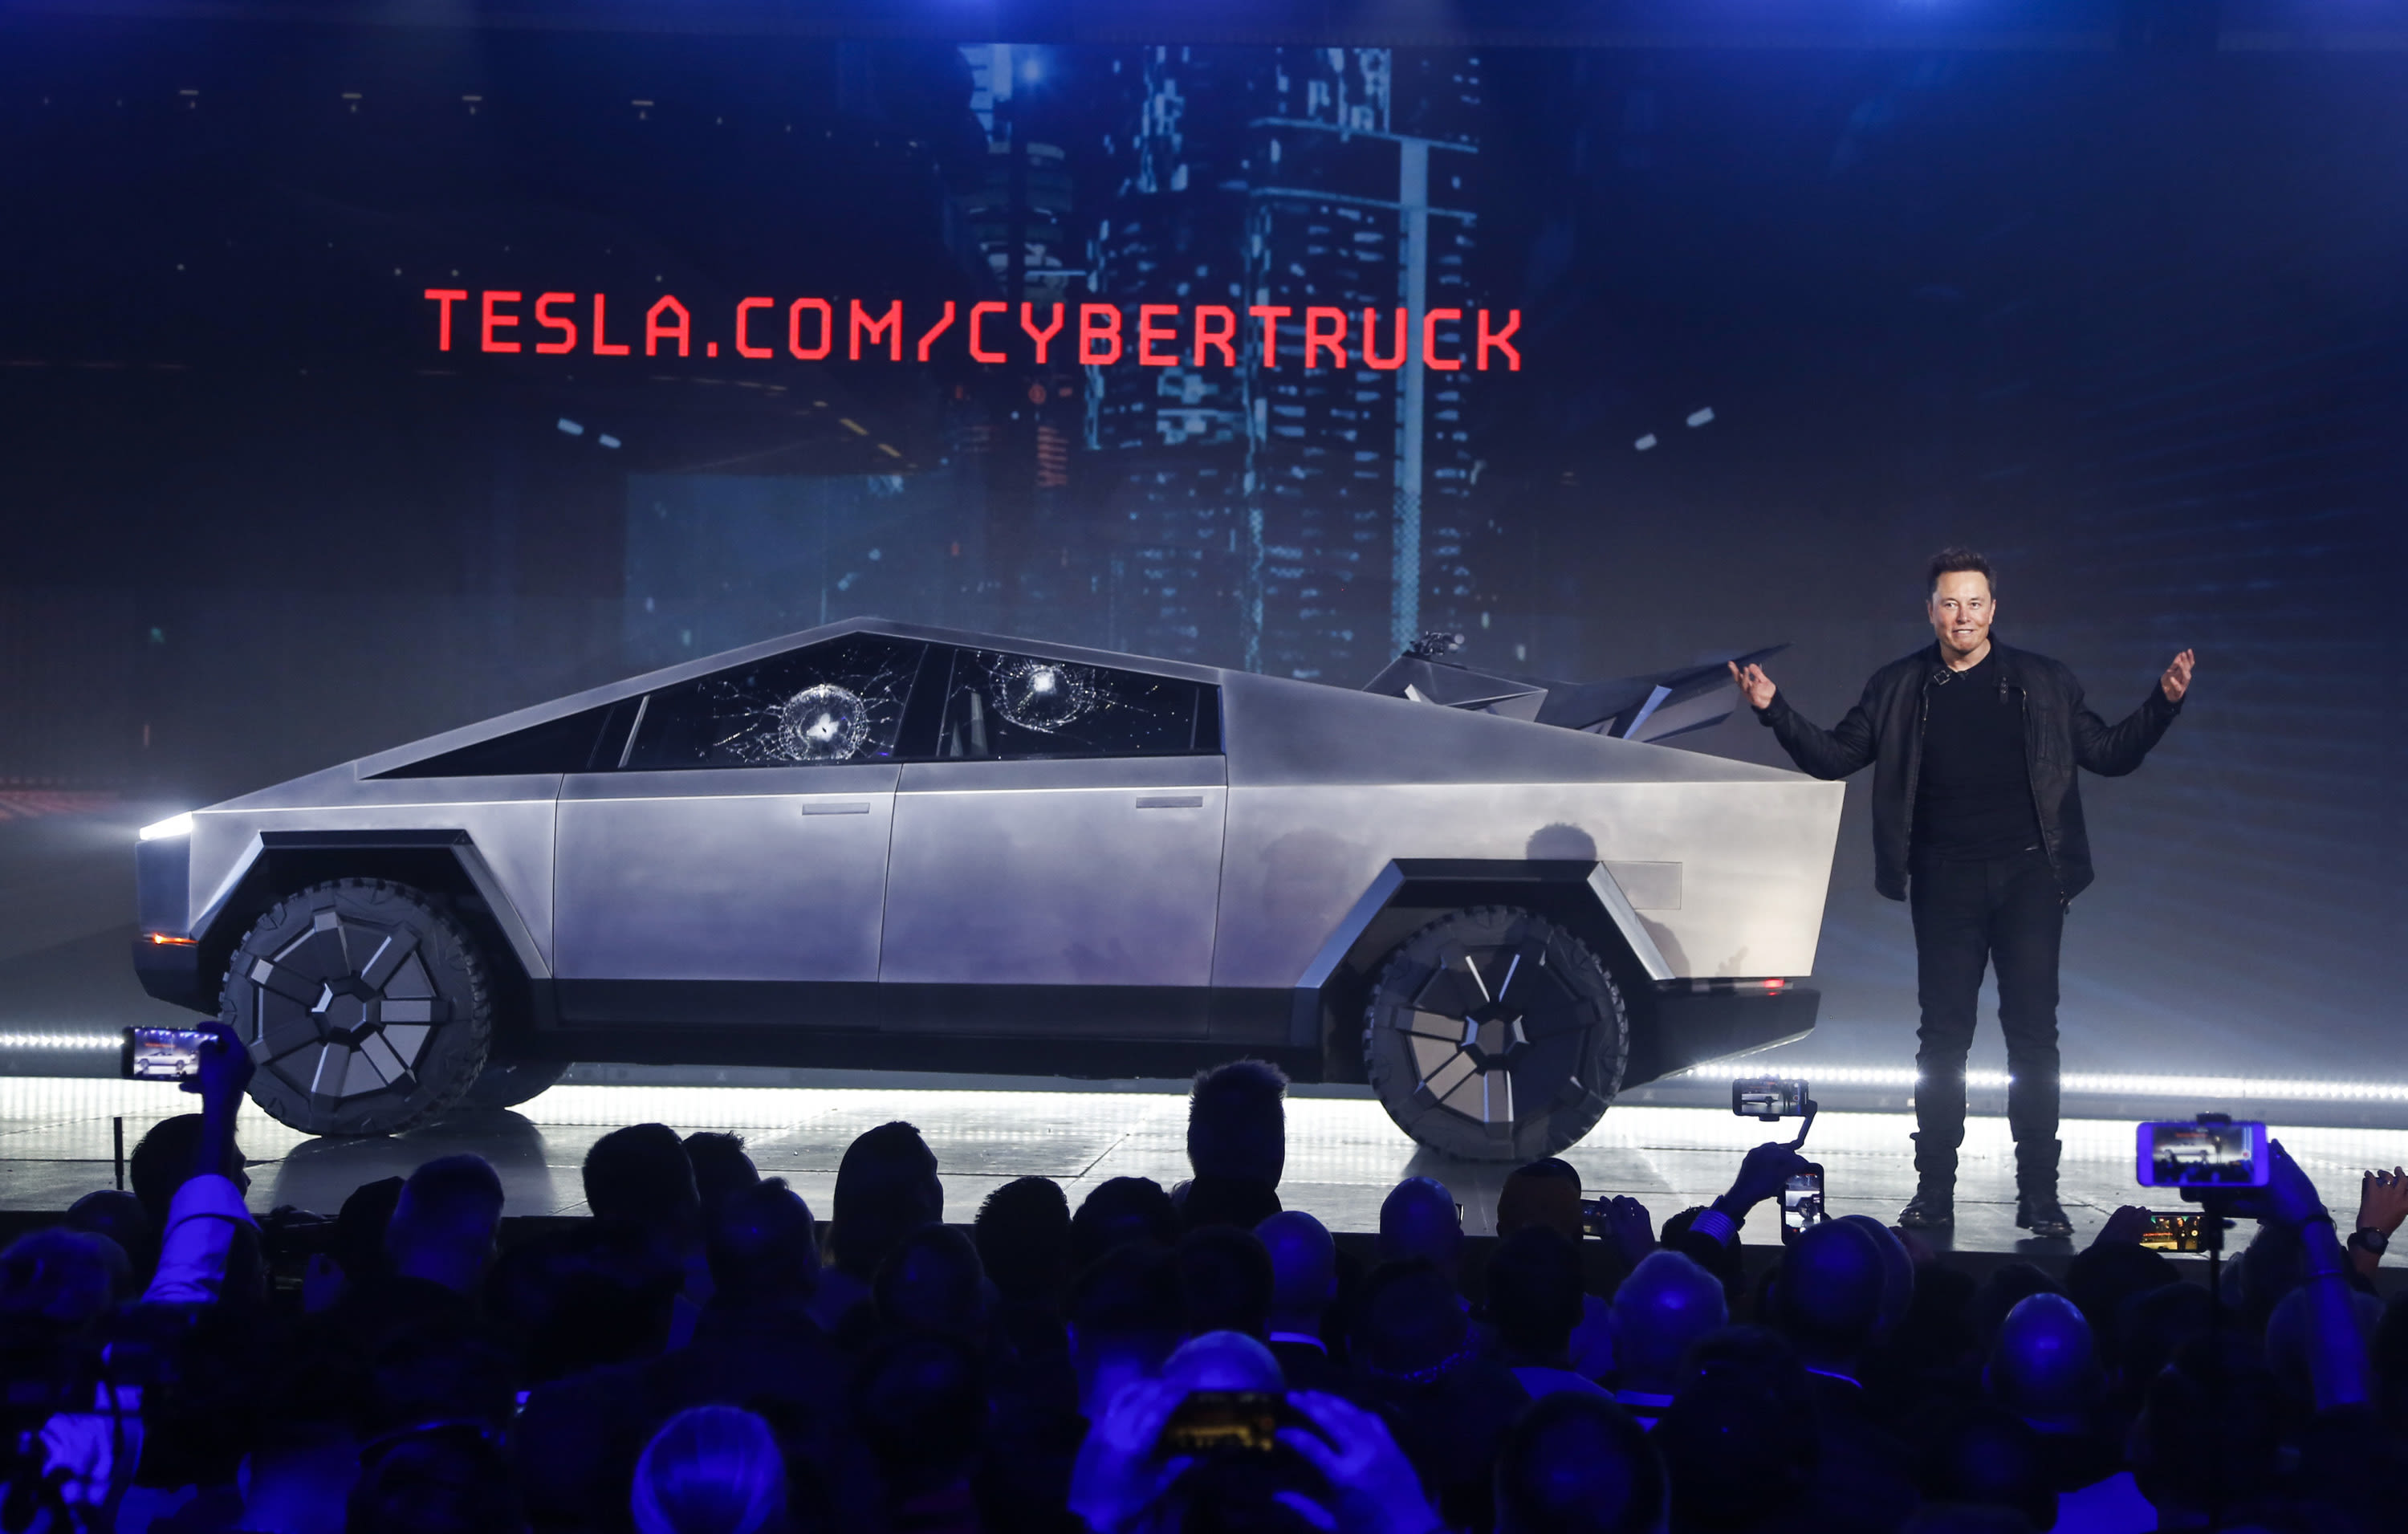 Will Tesla's Cybertruck define its future?